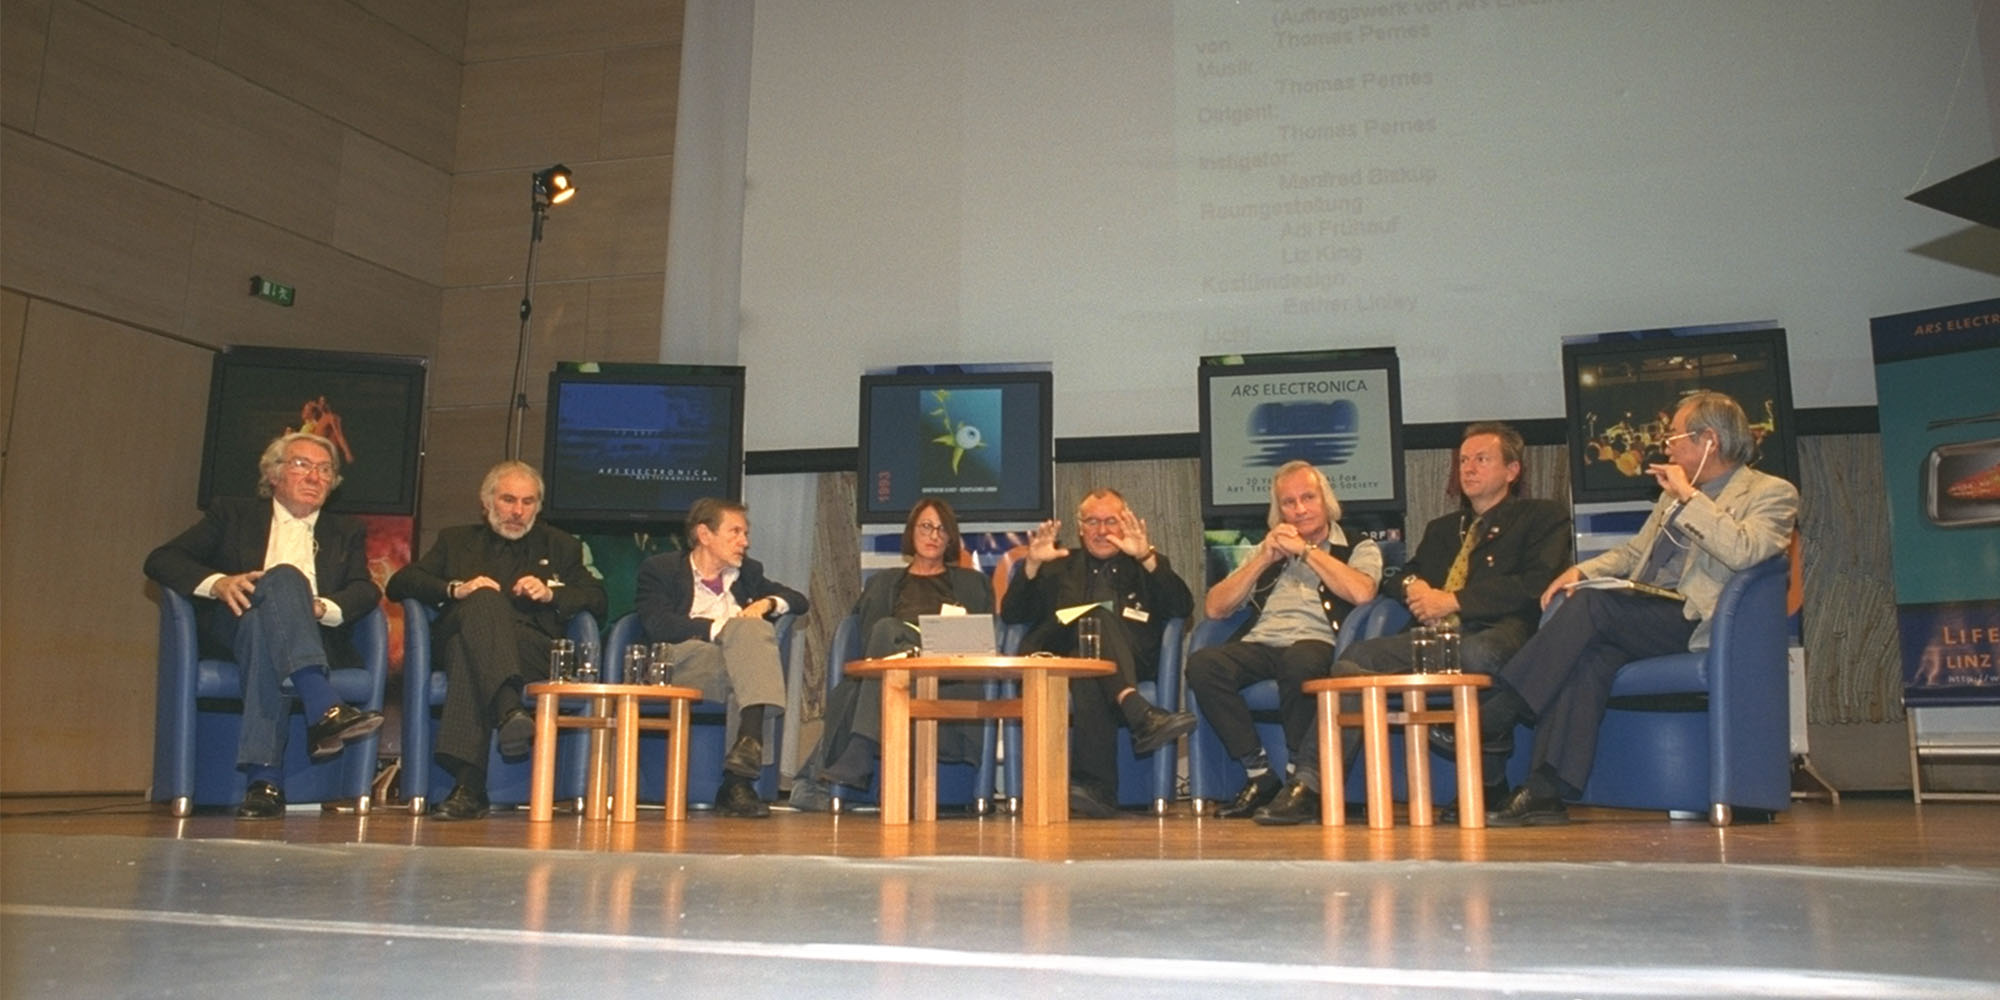 1999: Ars Electronica conference, Otto Piene, Ulli A. Rützel, Herbert W. Franke, Christine Schöpf, Hannes Leopoldseder, Walter Haupt, Itsuo Sakane